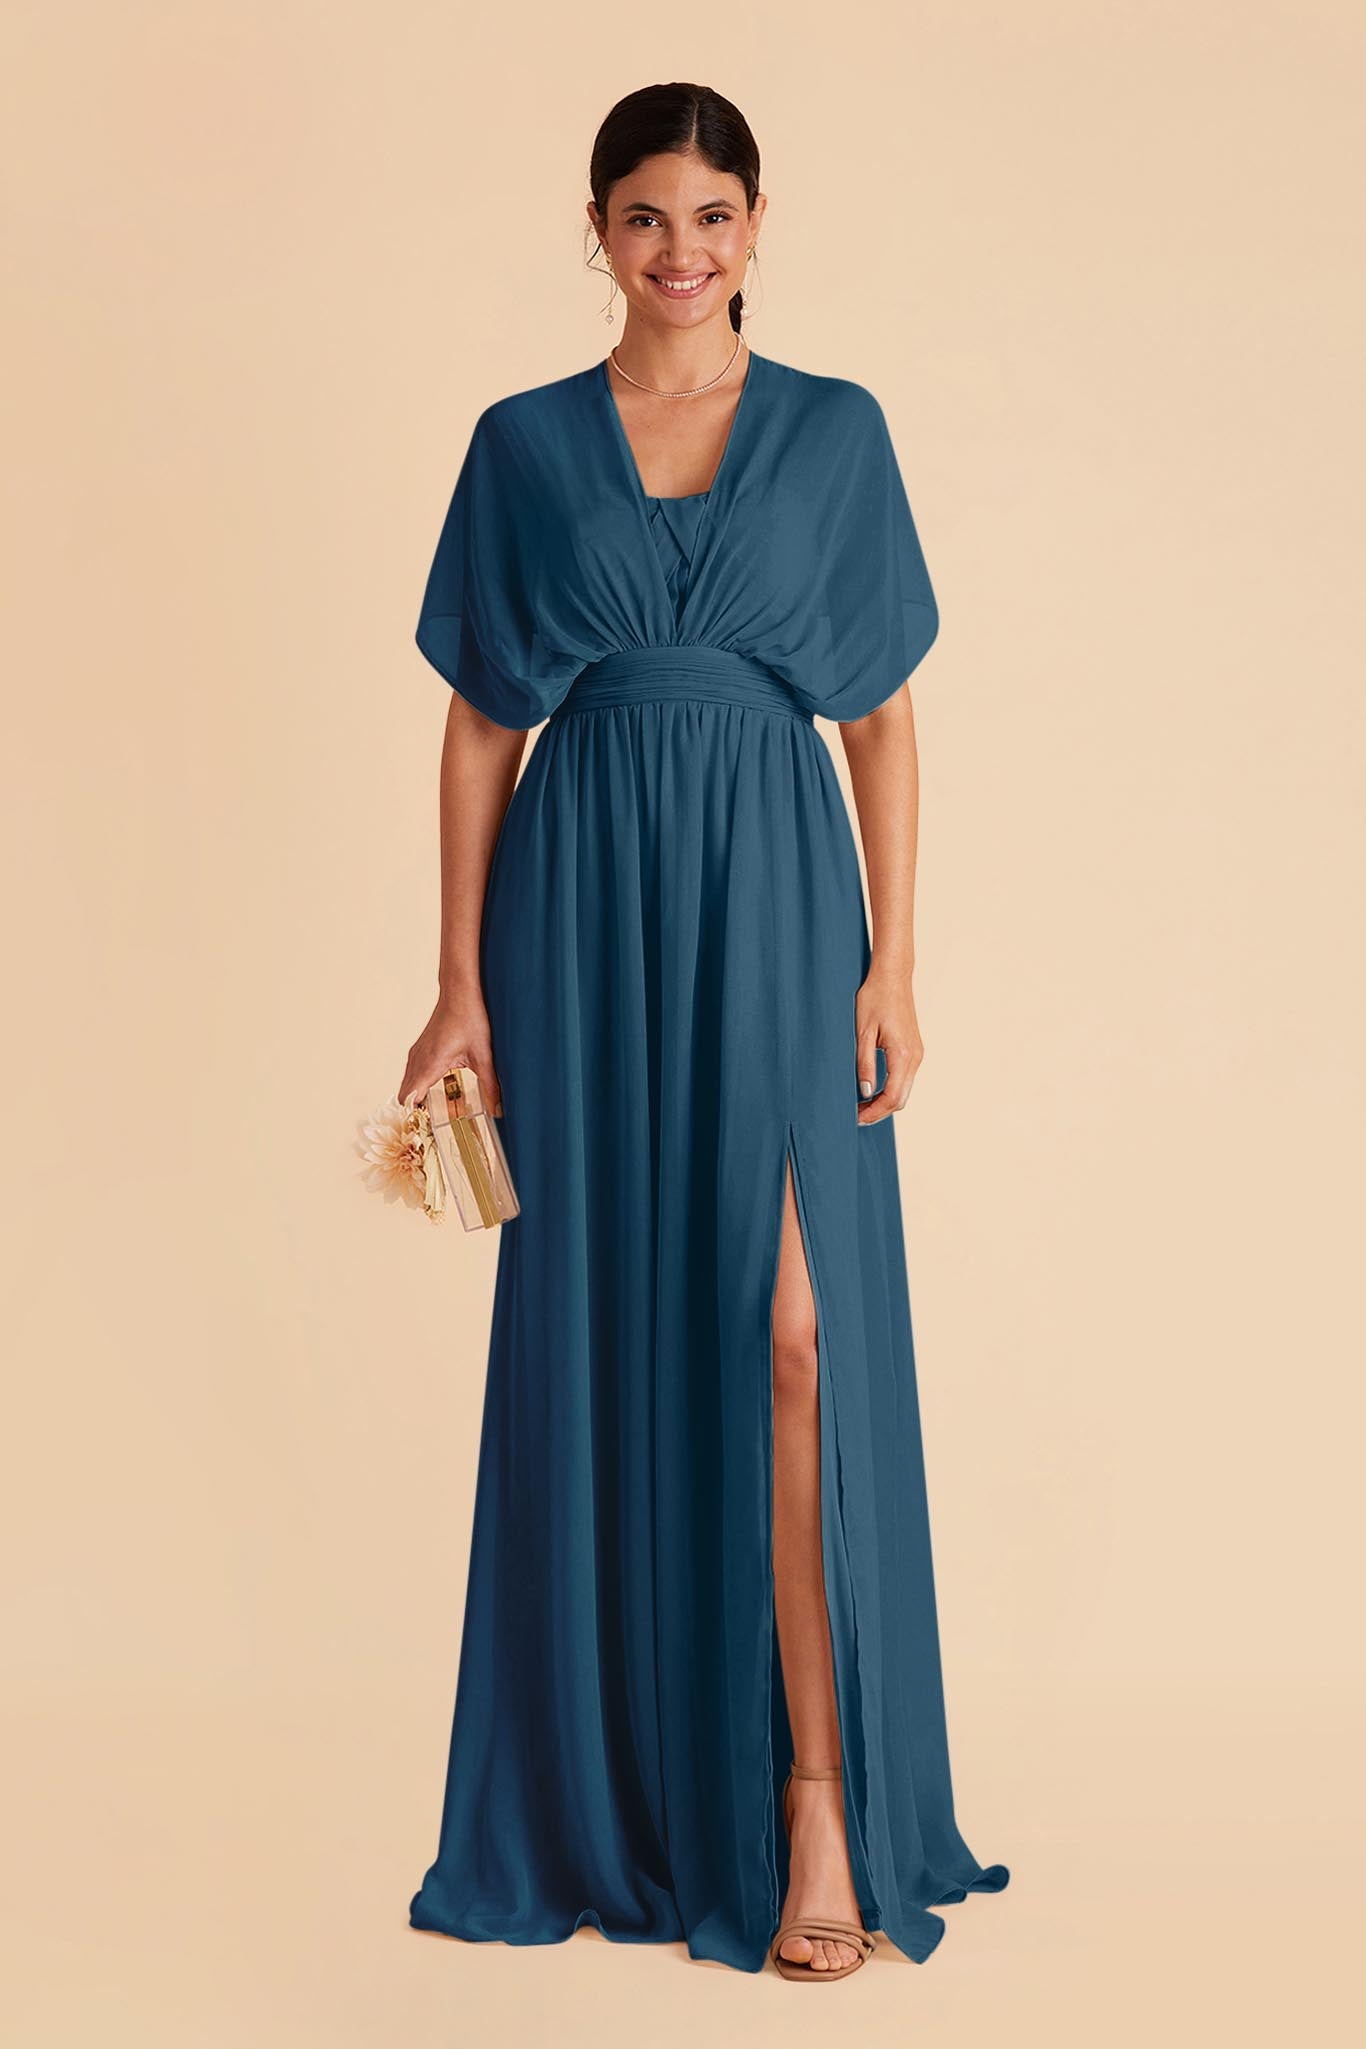 Ocean Blue Grace Convertible Dress by Birdy Grey